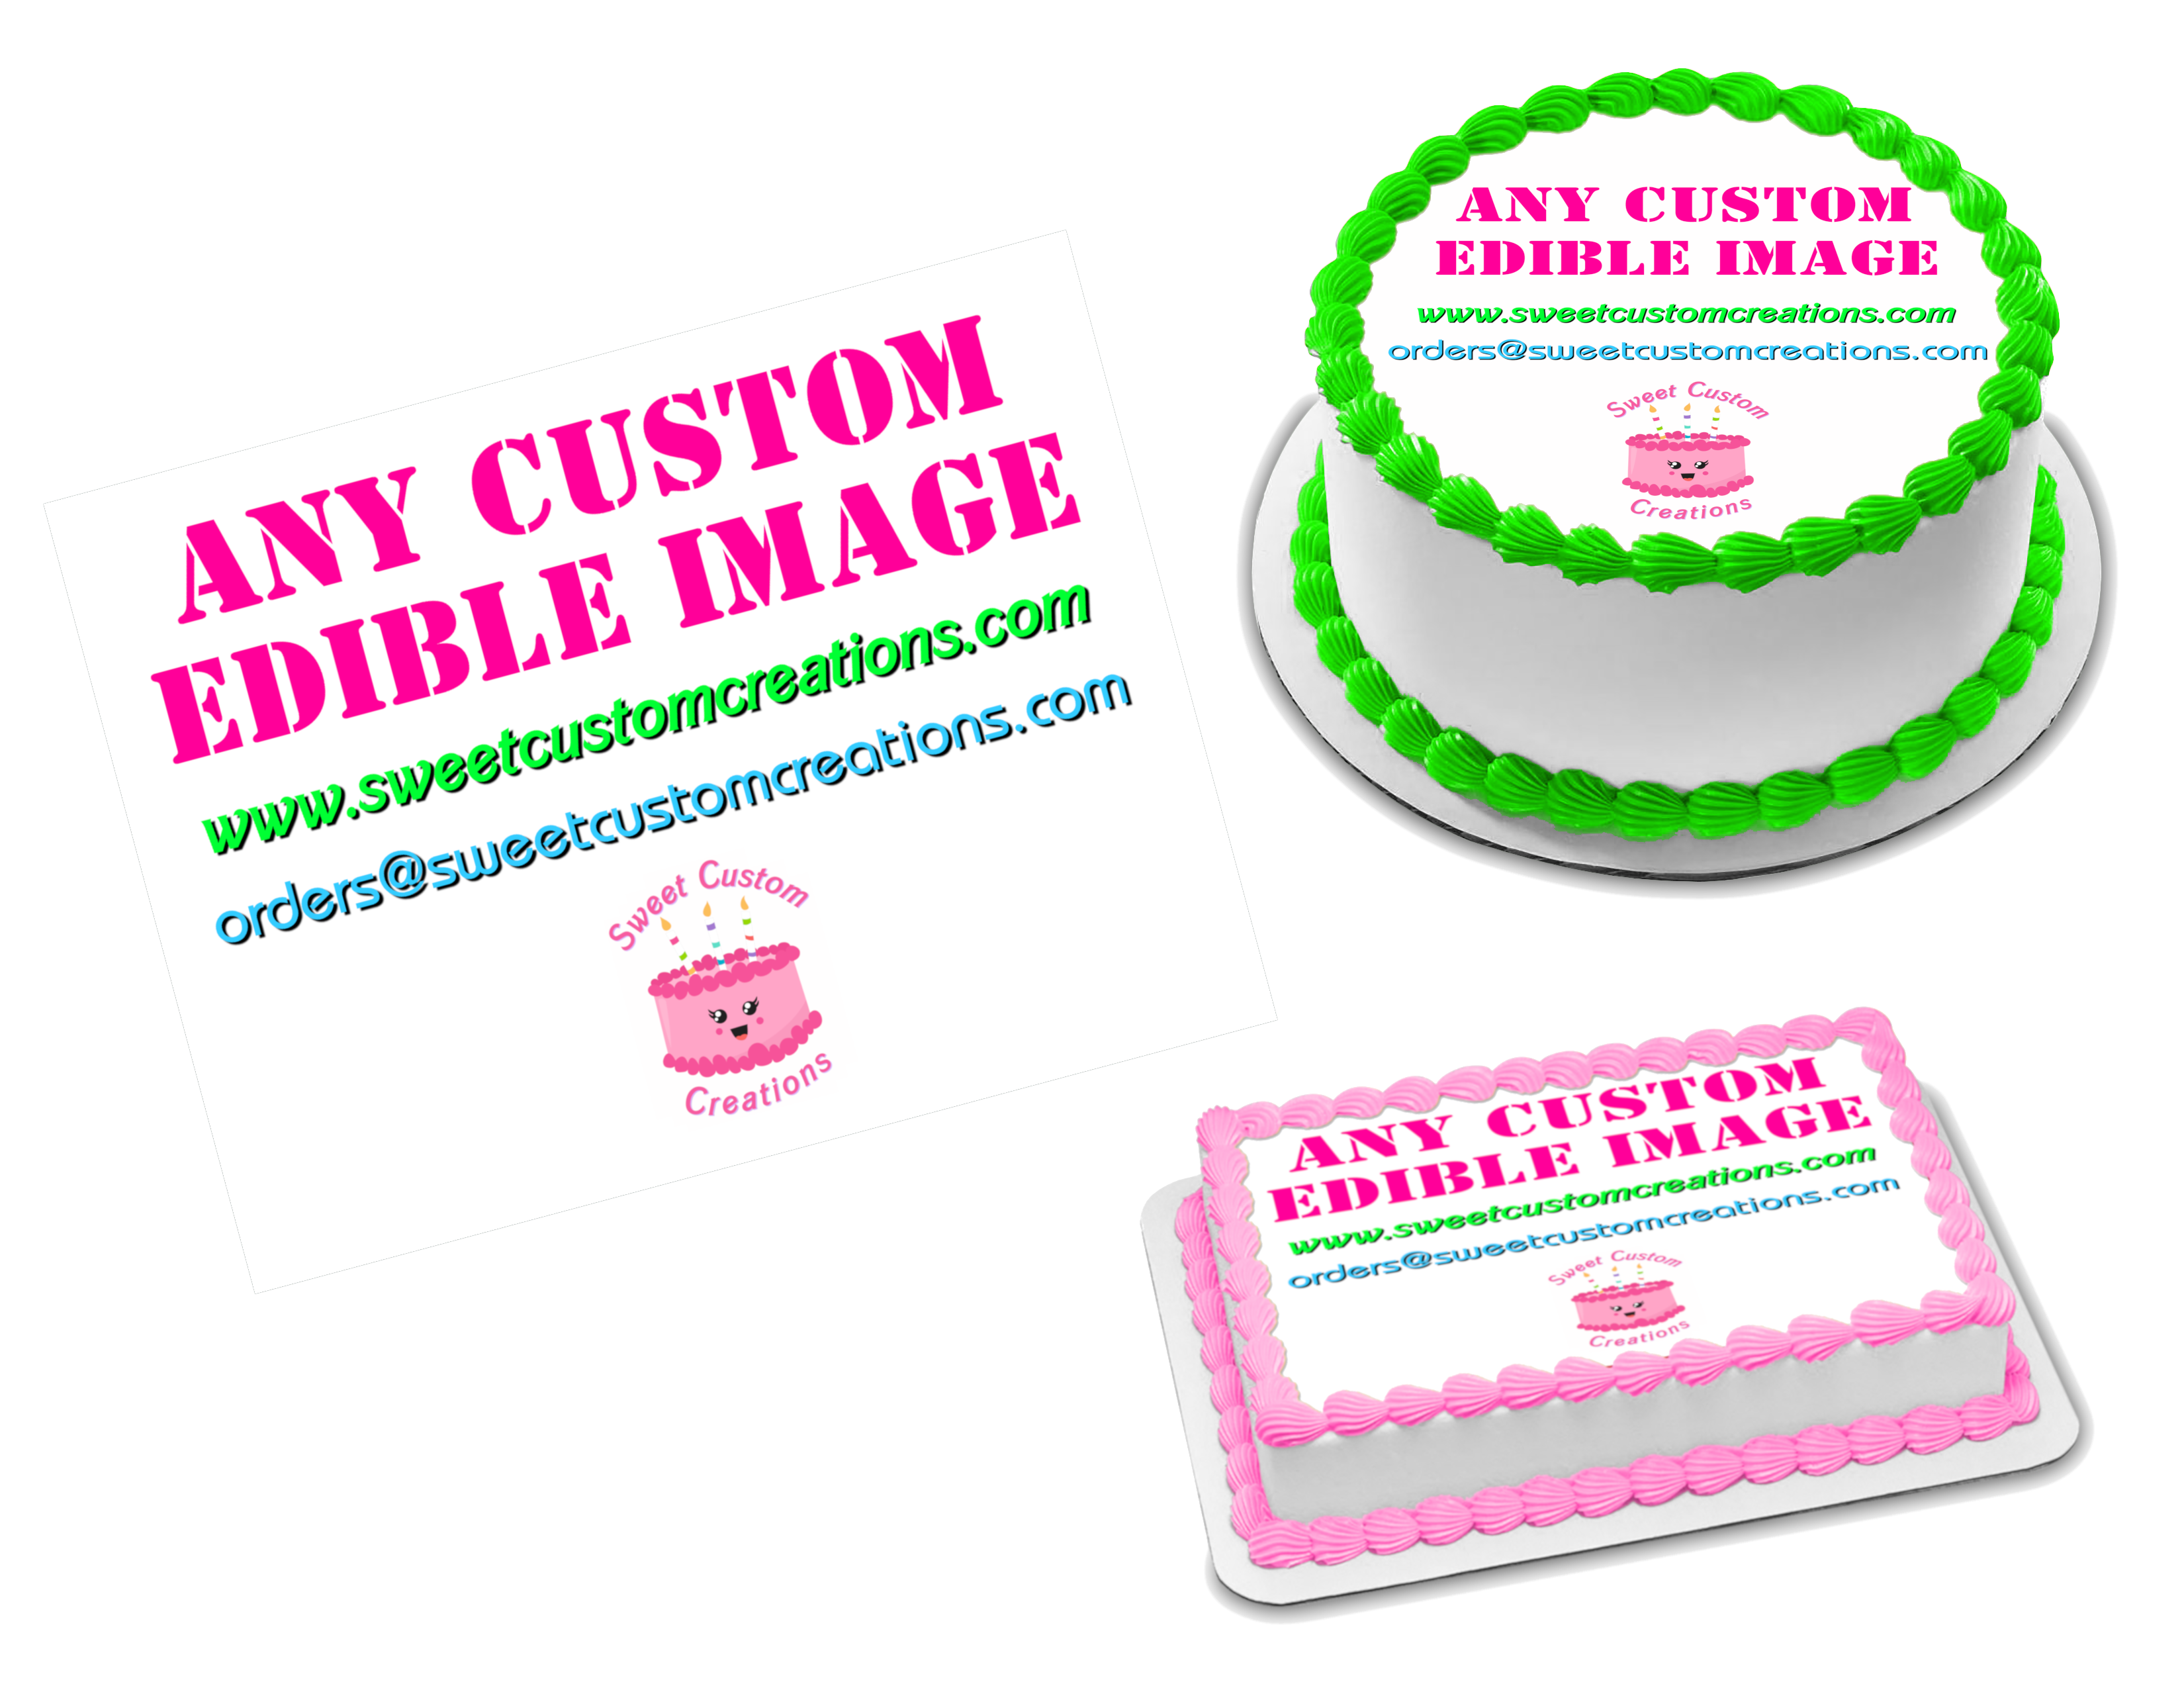 Disney Zombies 3 Edible Cake Topper 1/4 Sheet Personalized 